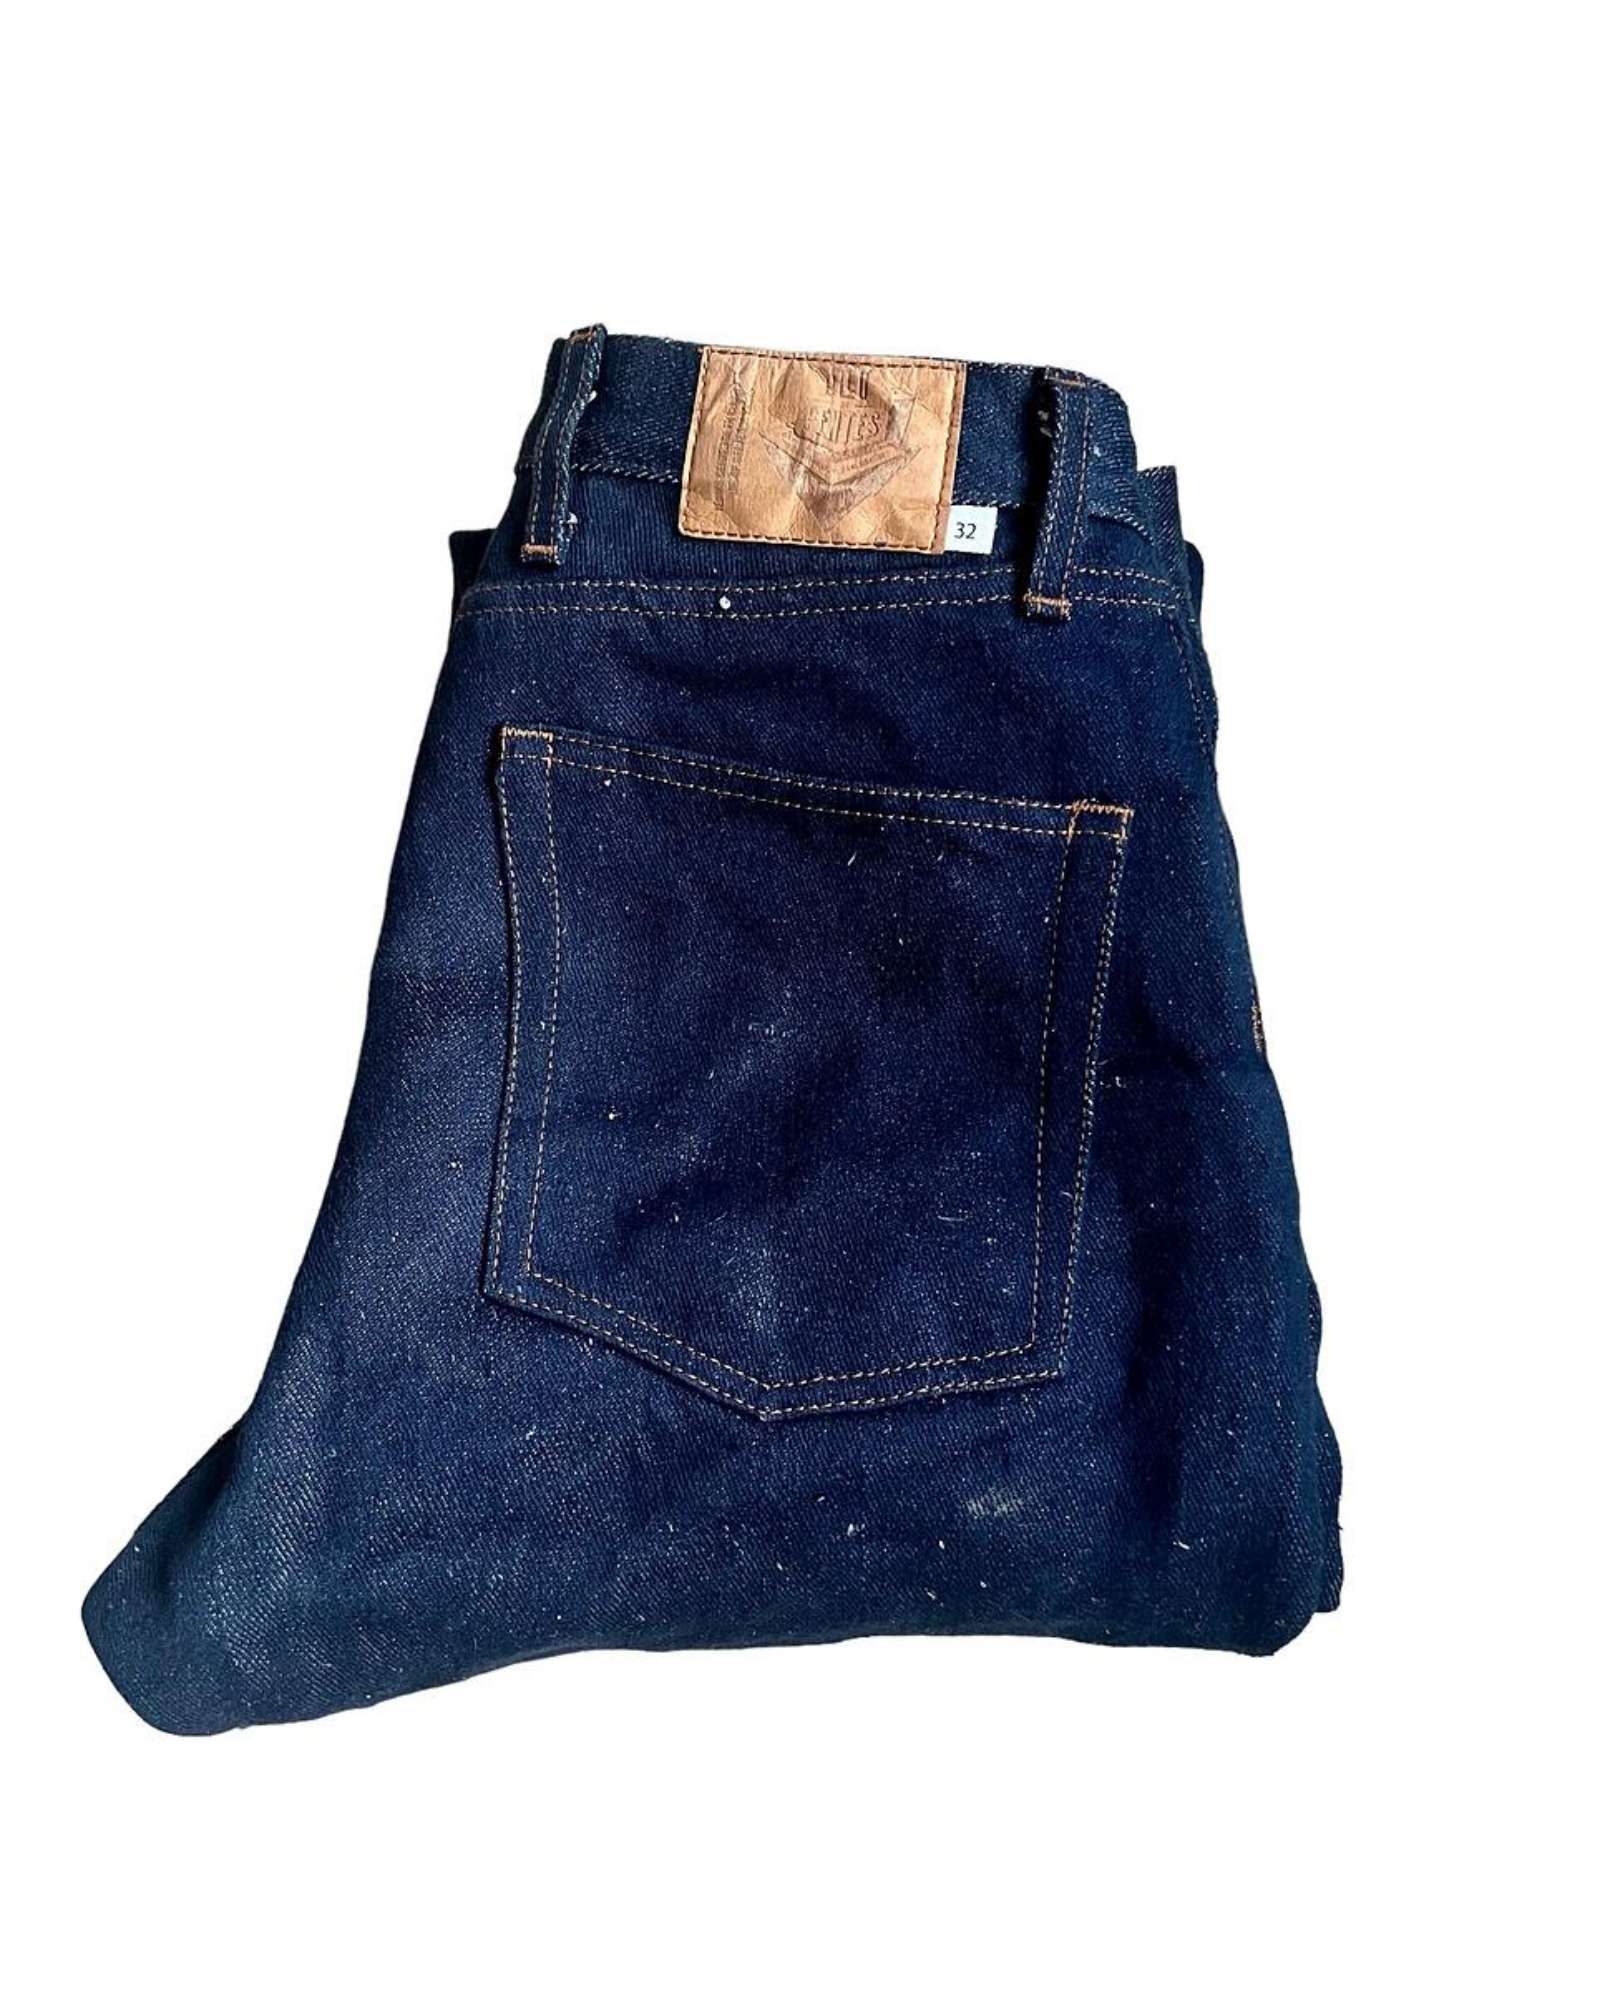 Men's Fit Jeans tradition of denim